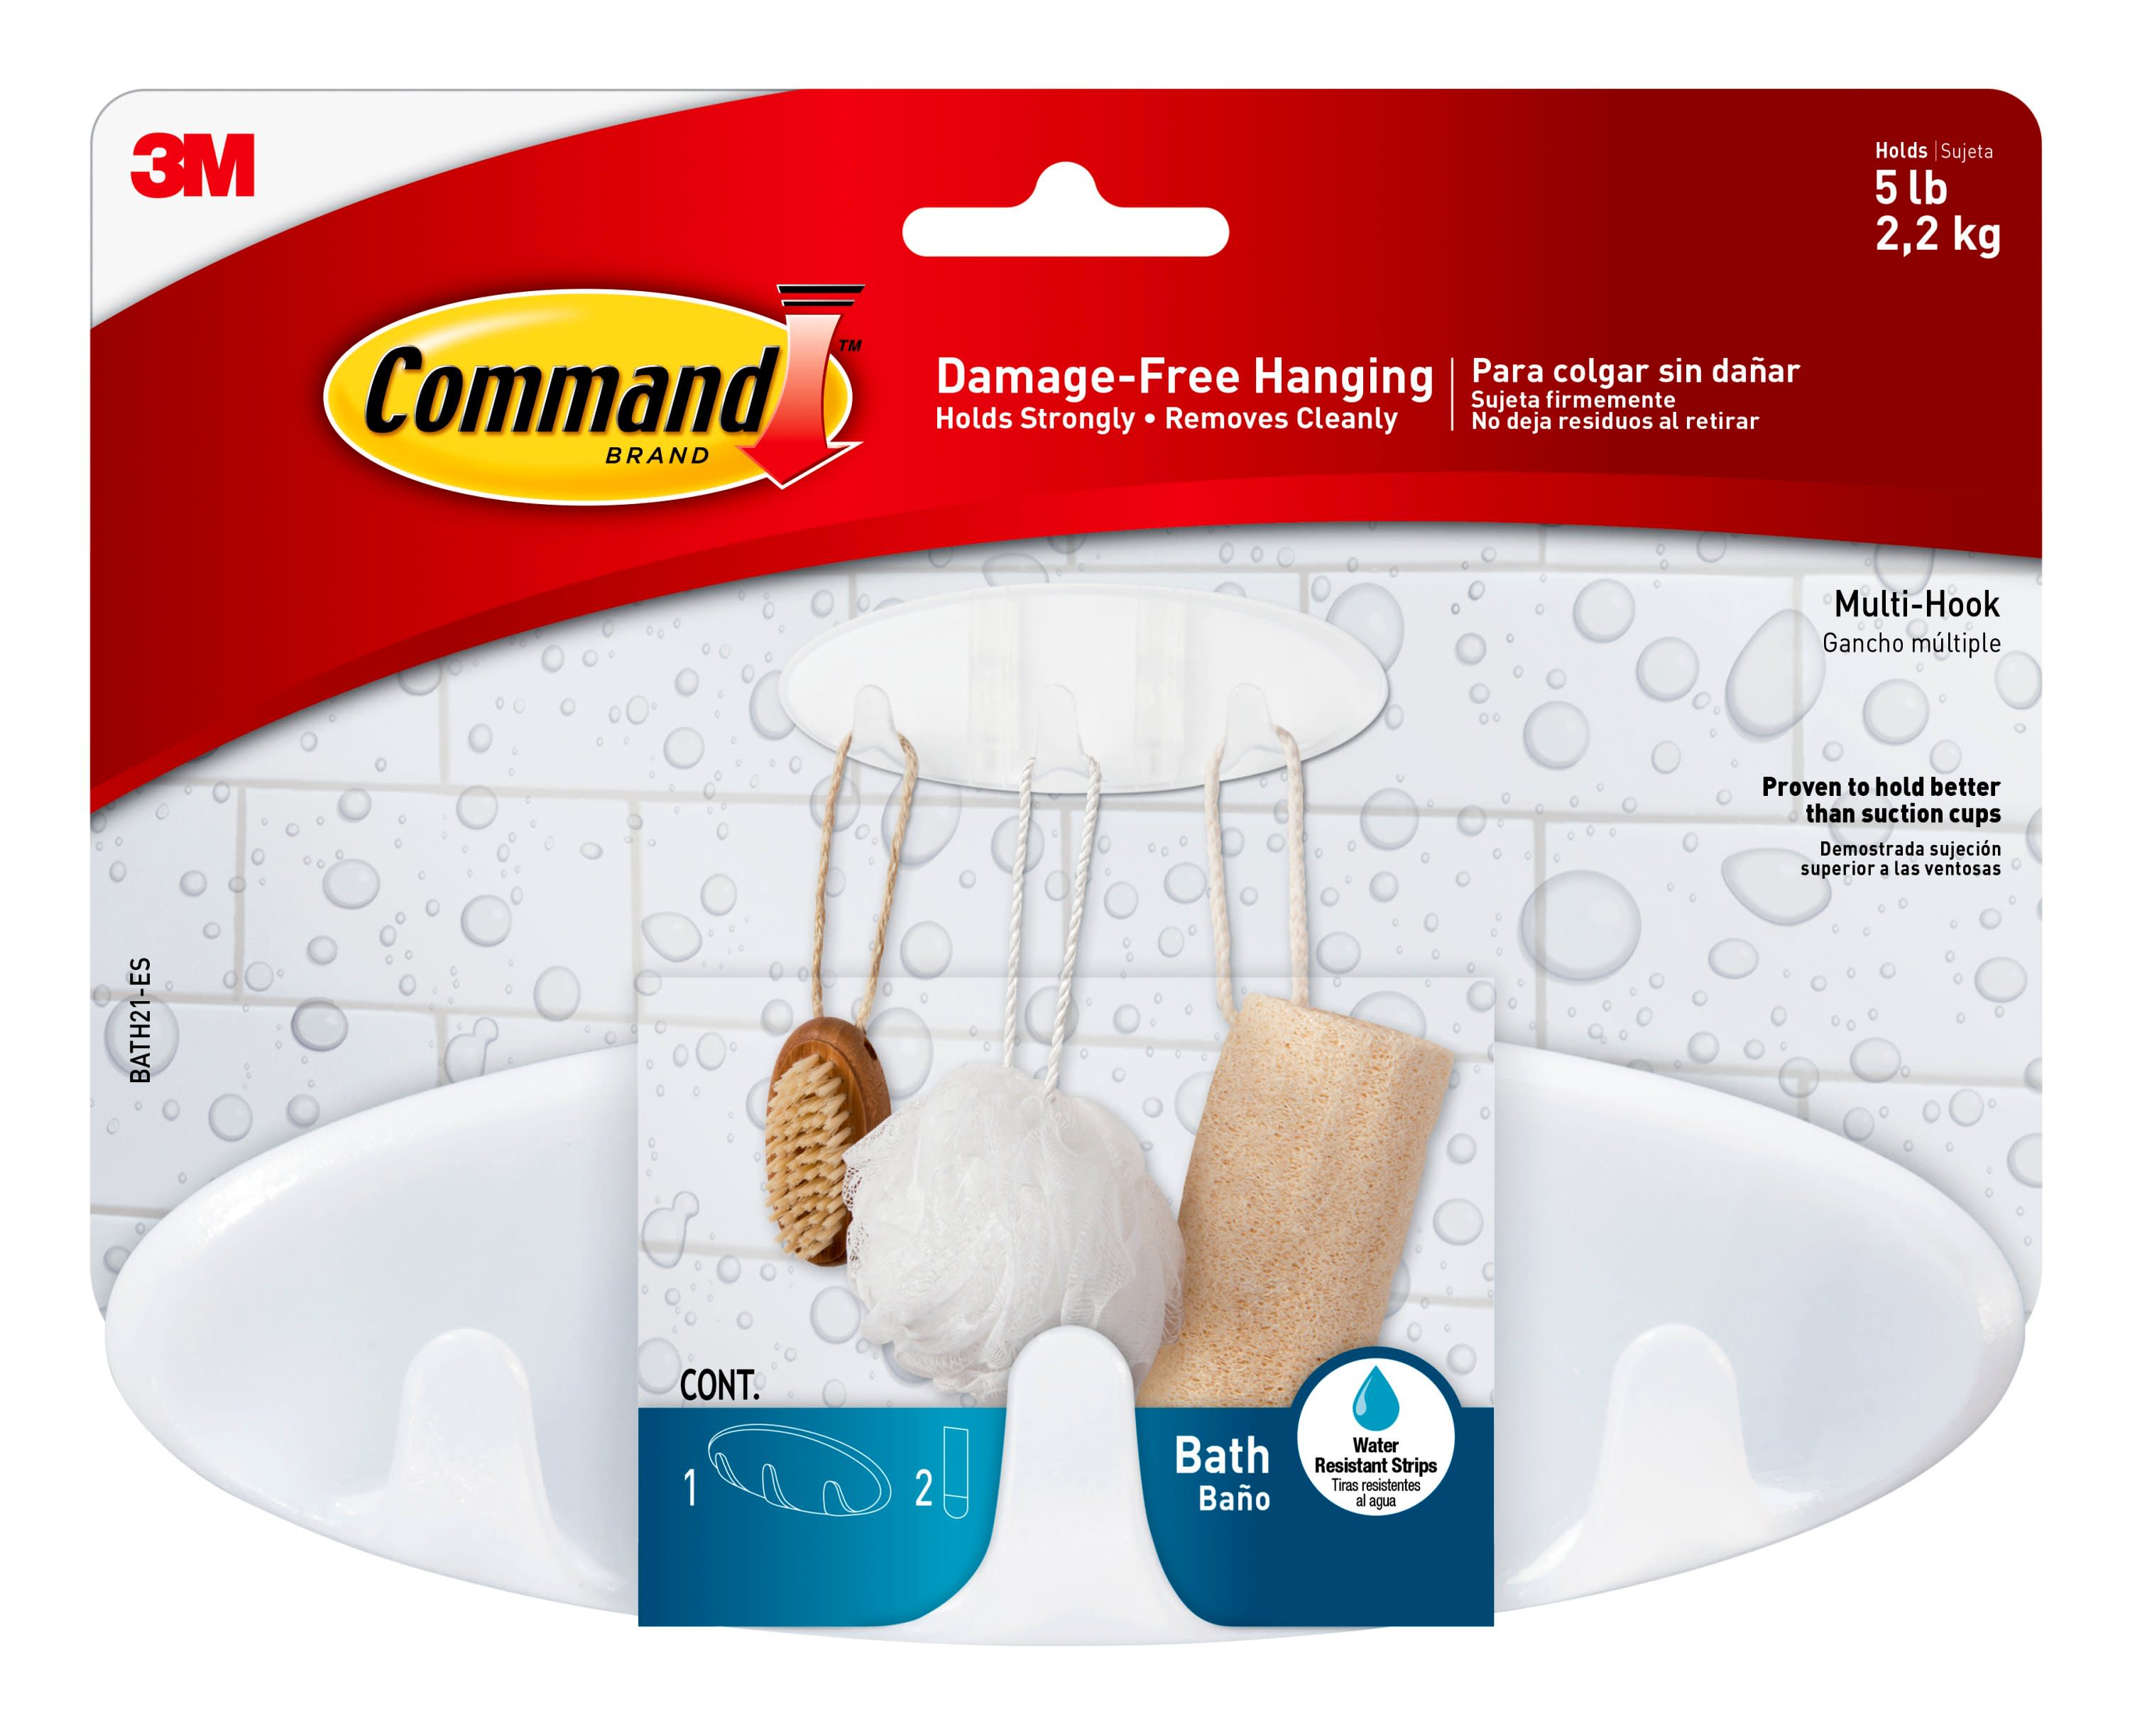 Command Bath Multi-Hook, 1 Wall Multi-hook, 2 Large Water Resistant Strips, Bathroom Organization - image 1 of 12